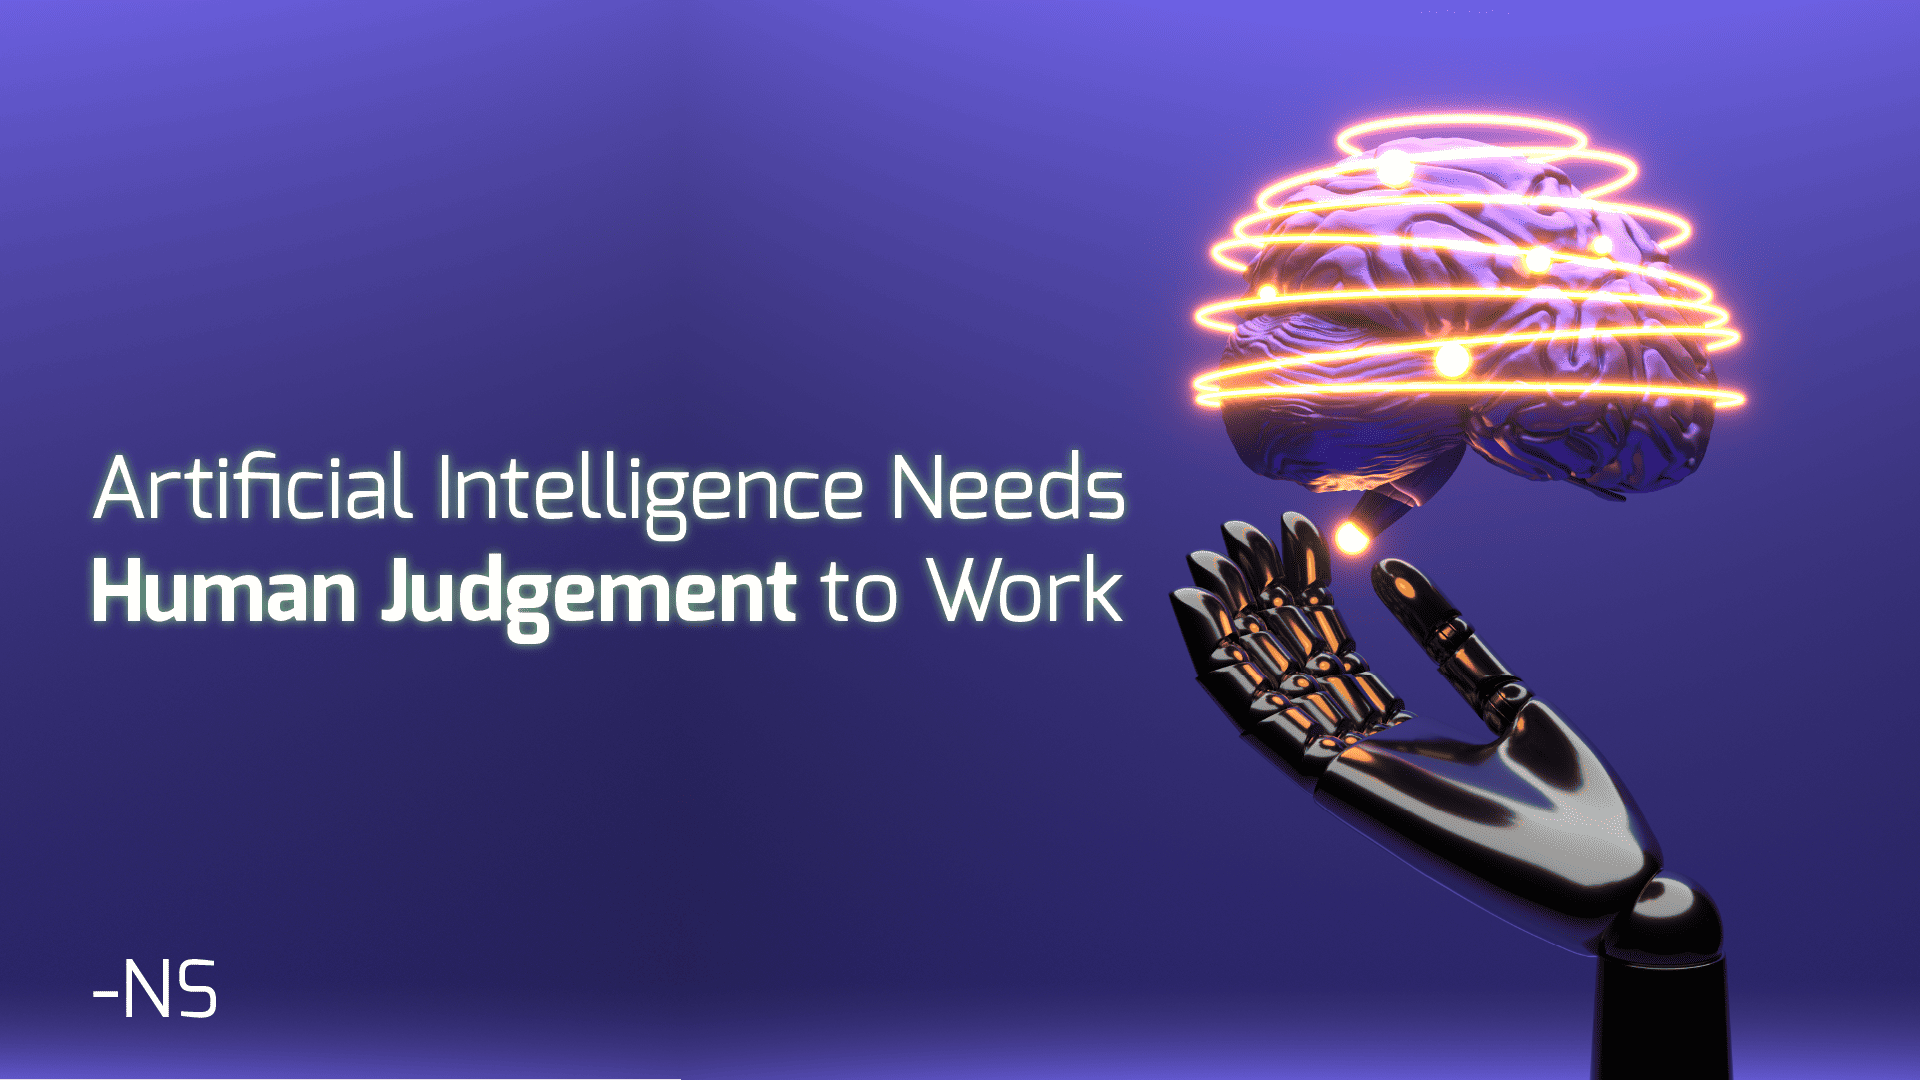 AI needs Human Judgement